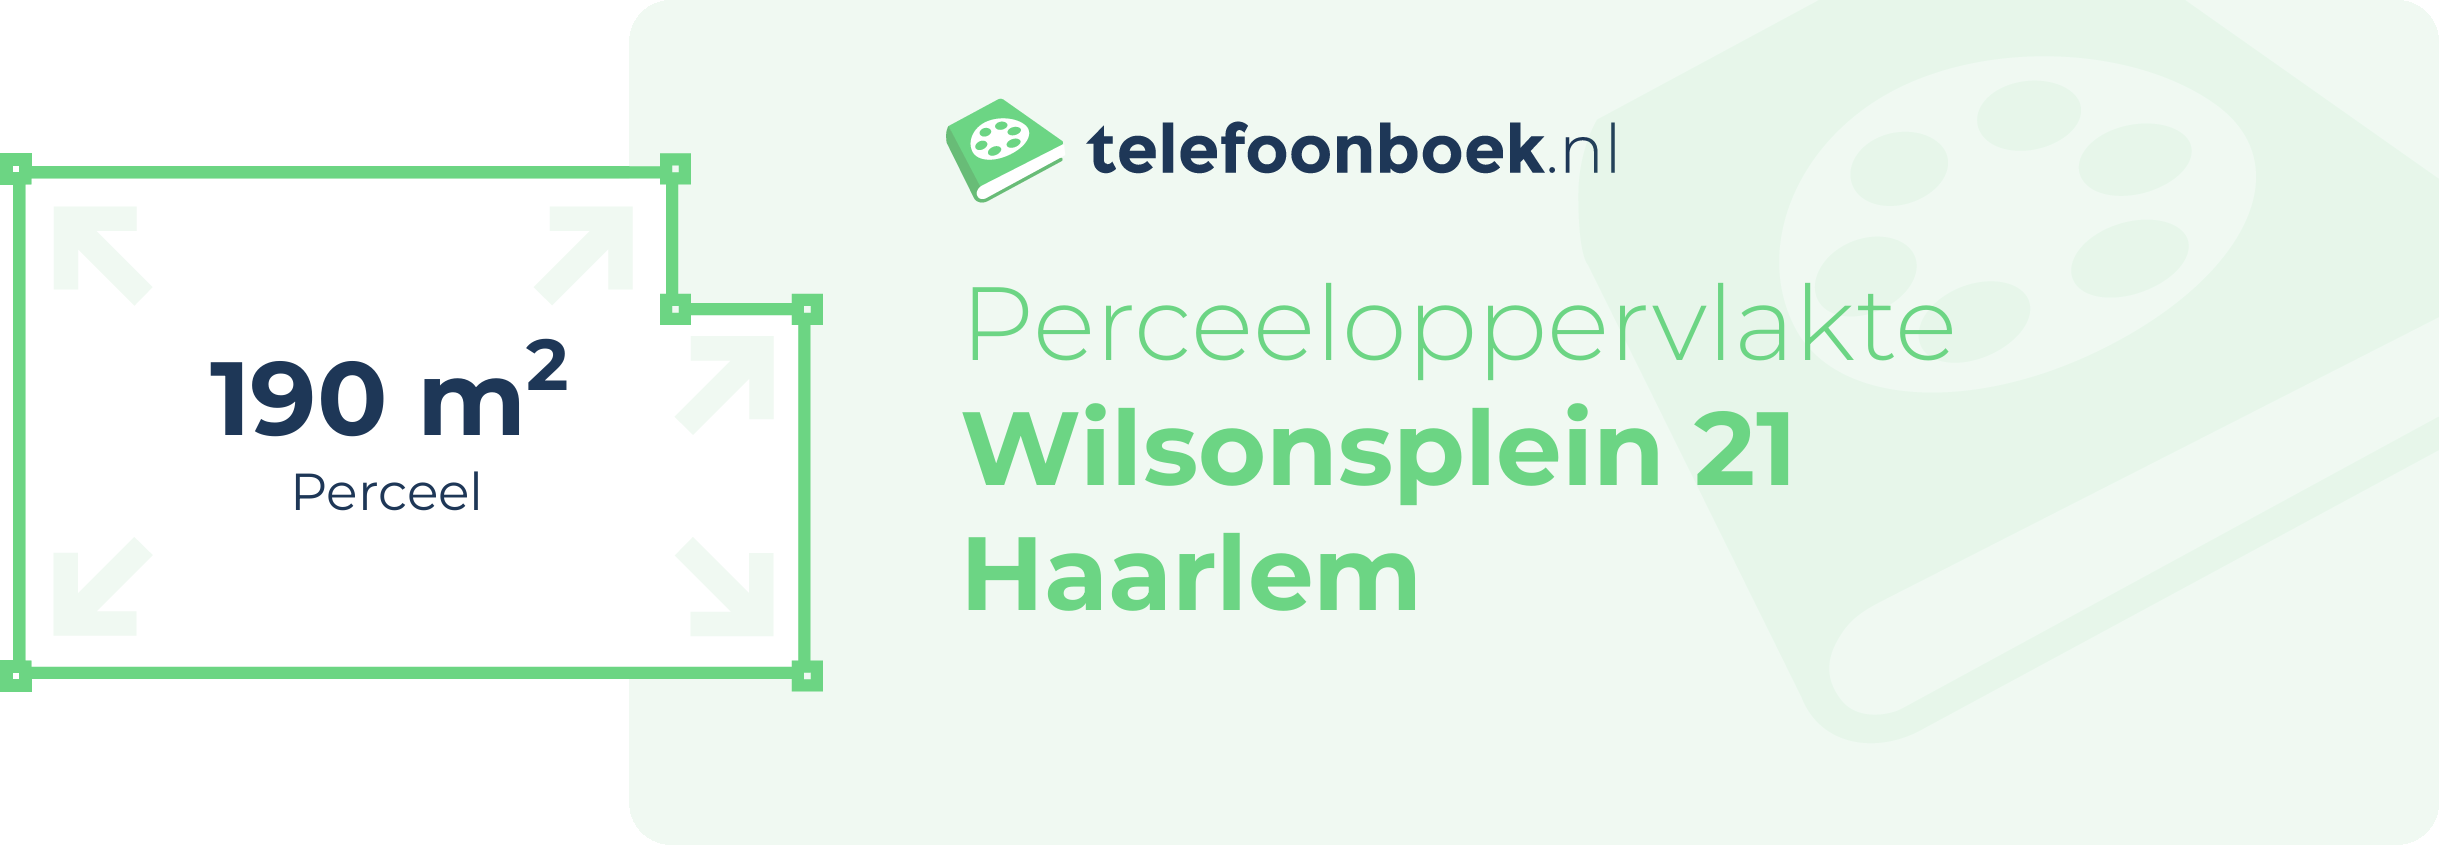 Perceeloppervlakte Wilsonsplein 21 Haarlem